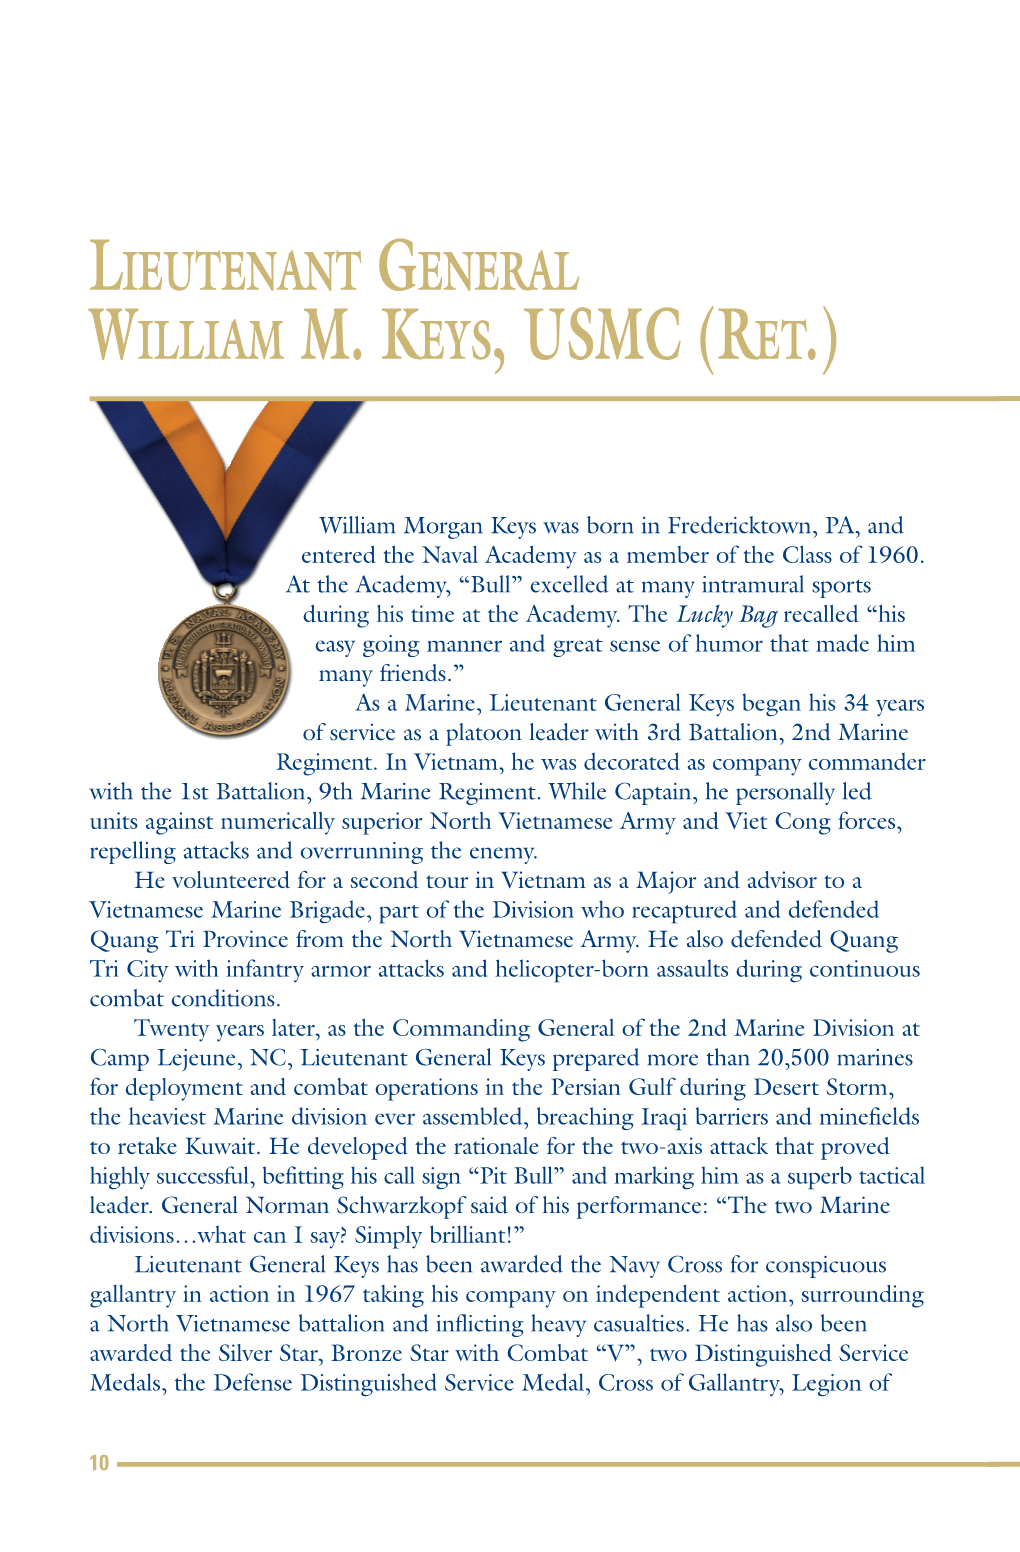 William M. Keys, Usmc (Ret.)